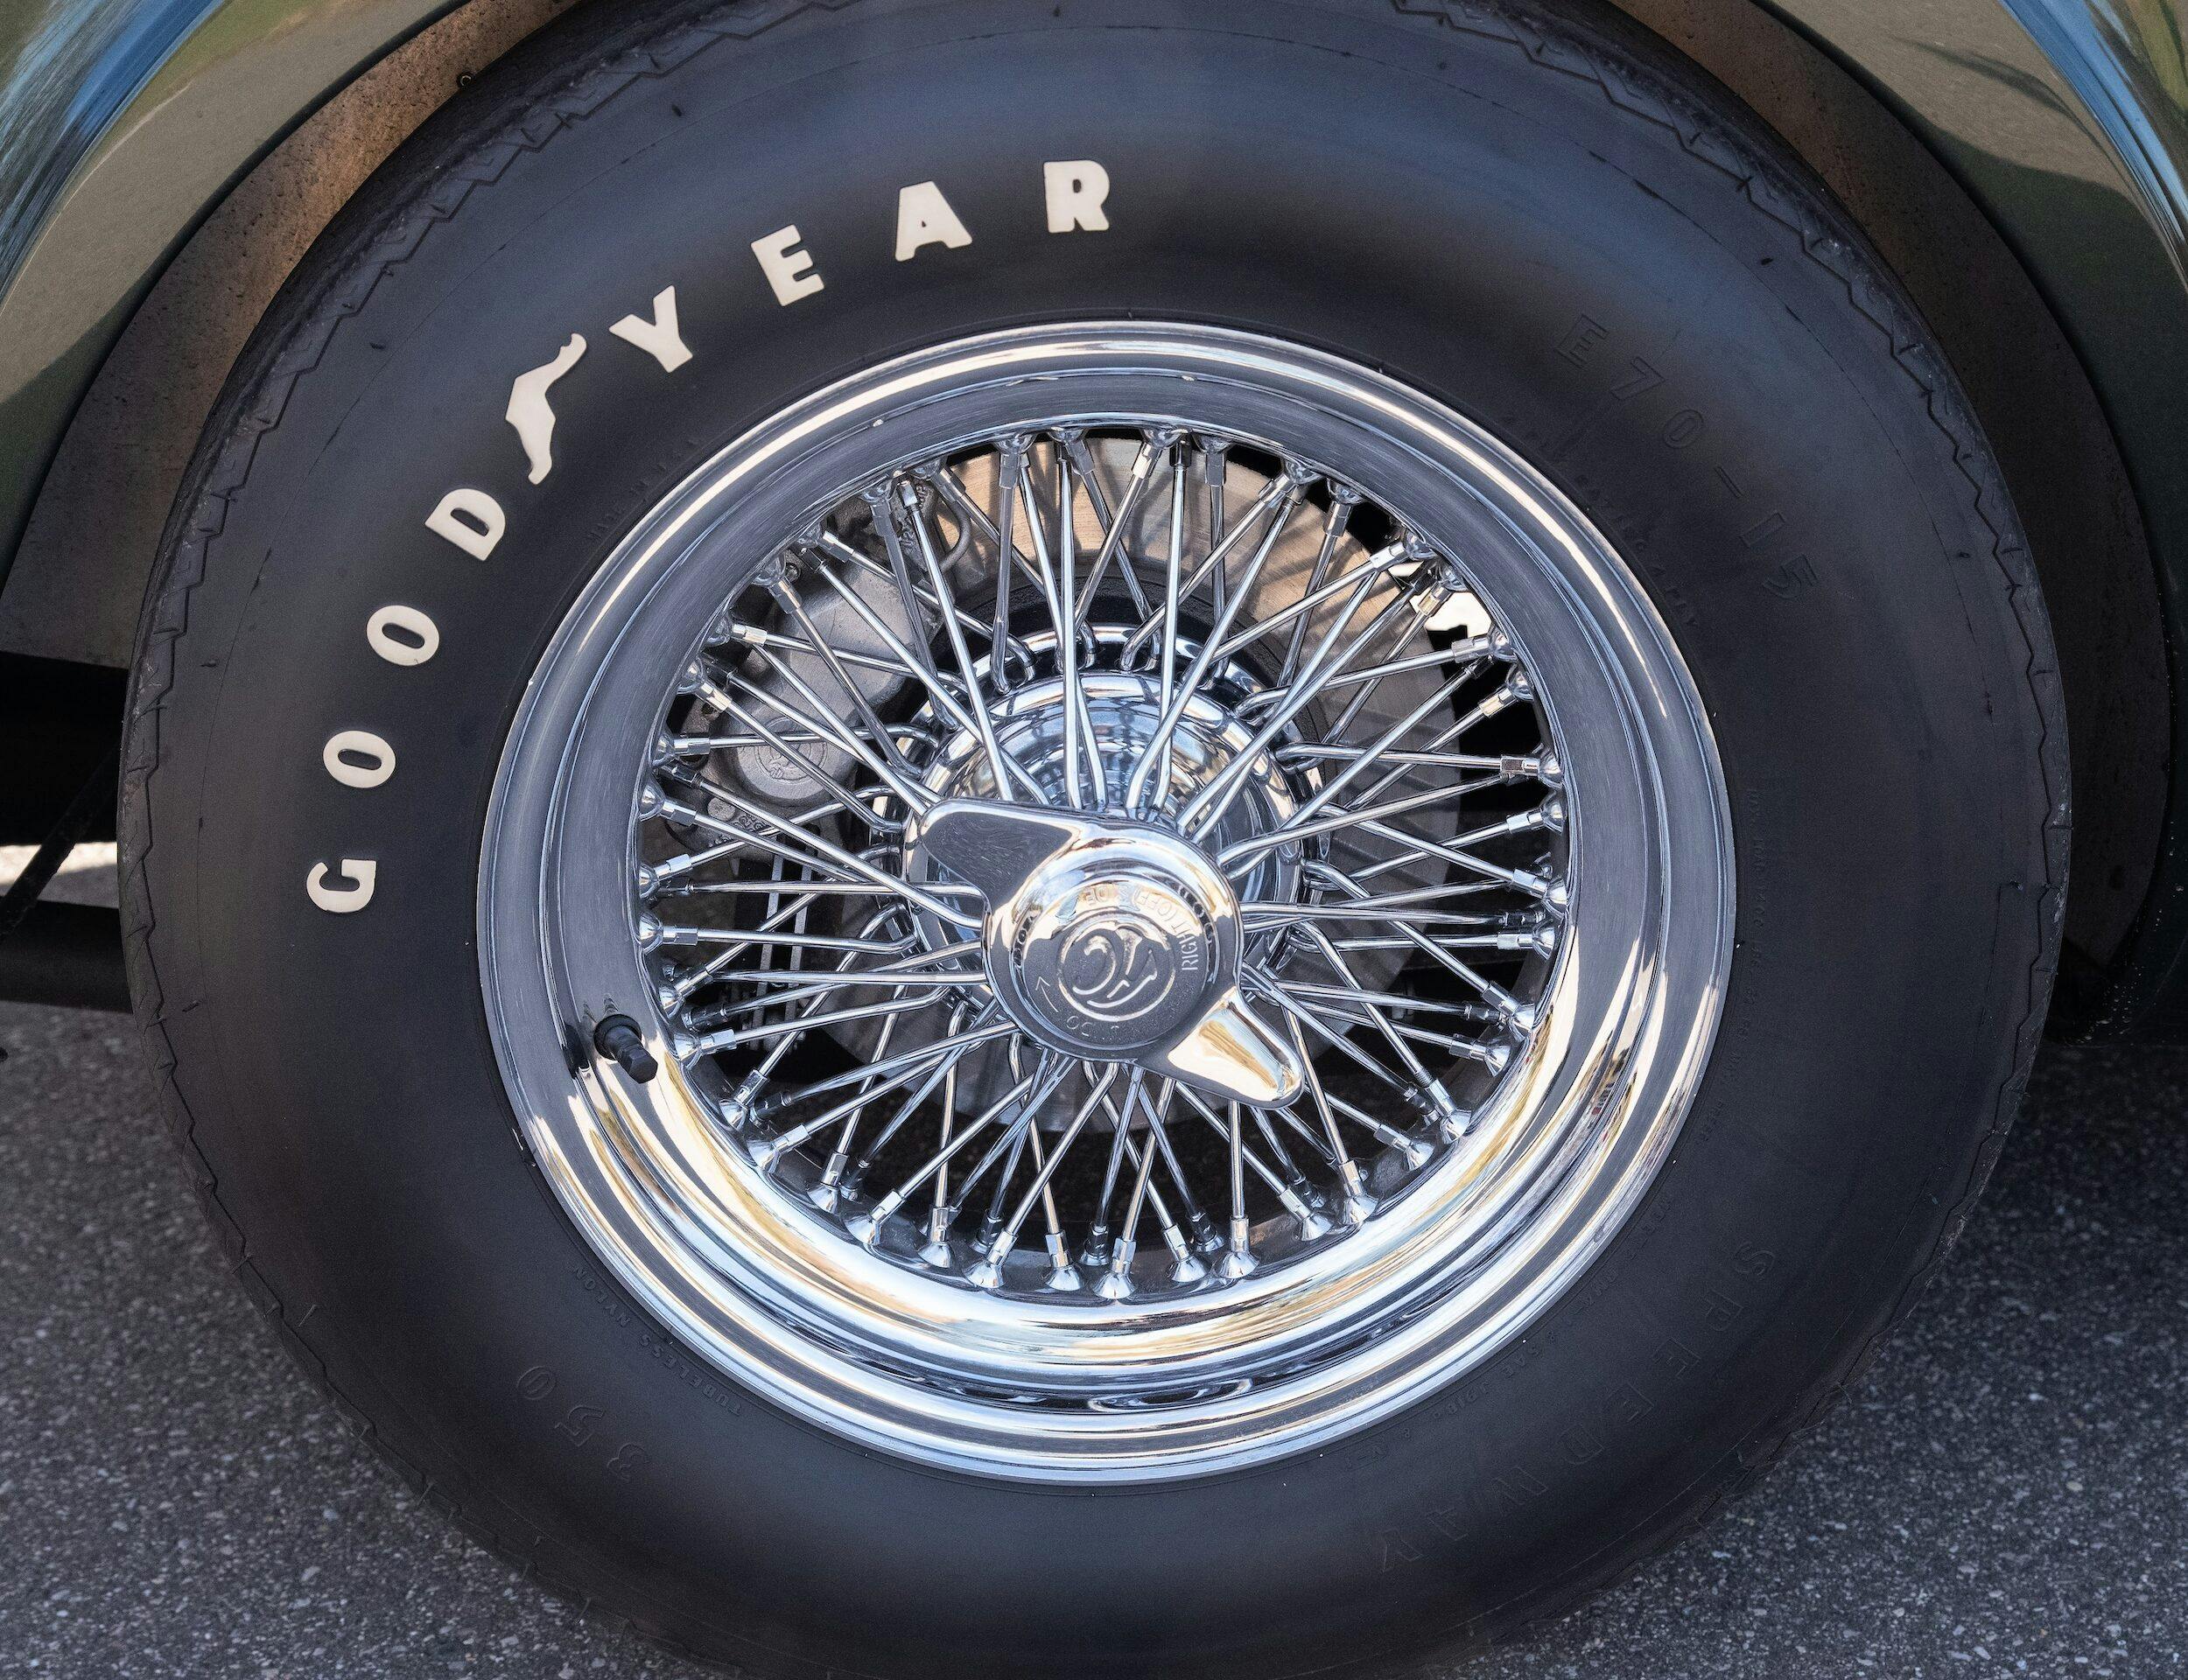 1964 Shelby Cobra wheel tire